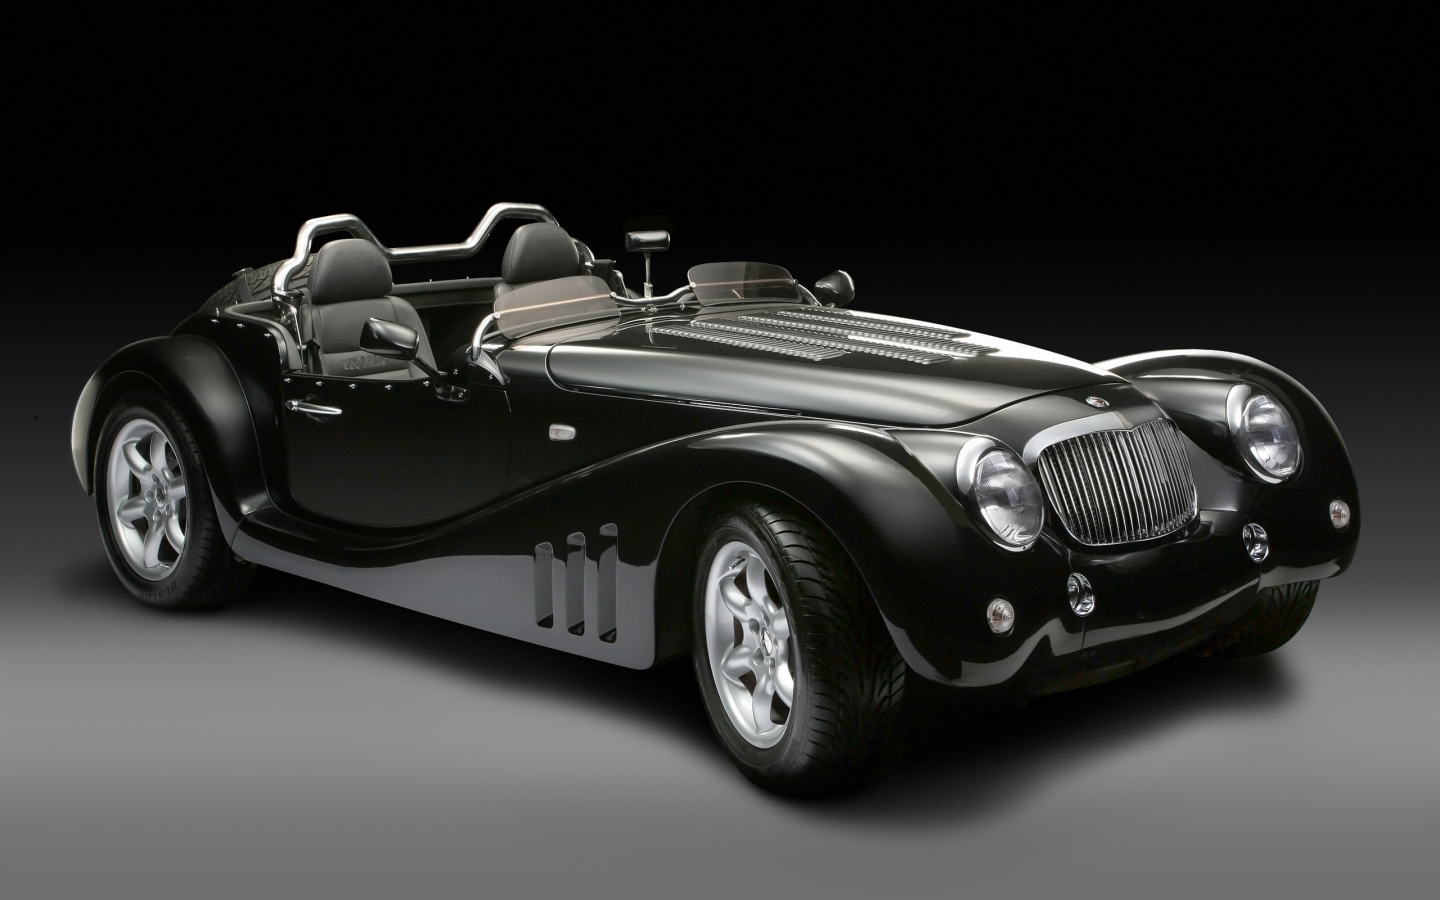 2013 Leopard Roadster Studio for 1440 x 900 widescreen resolution